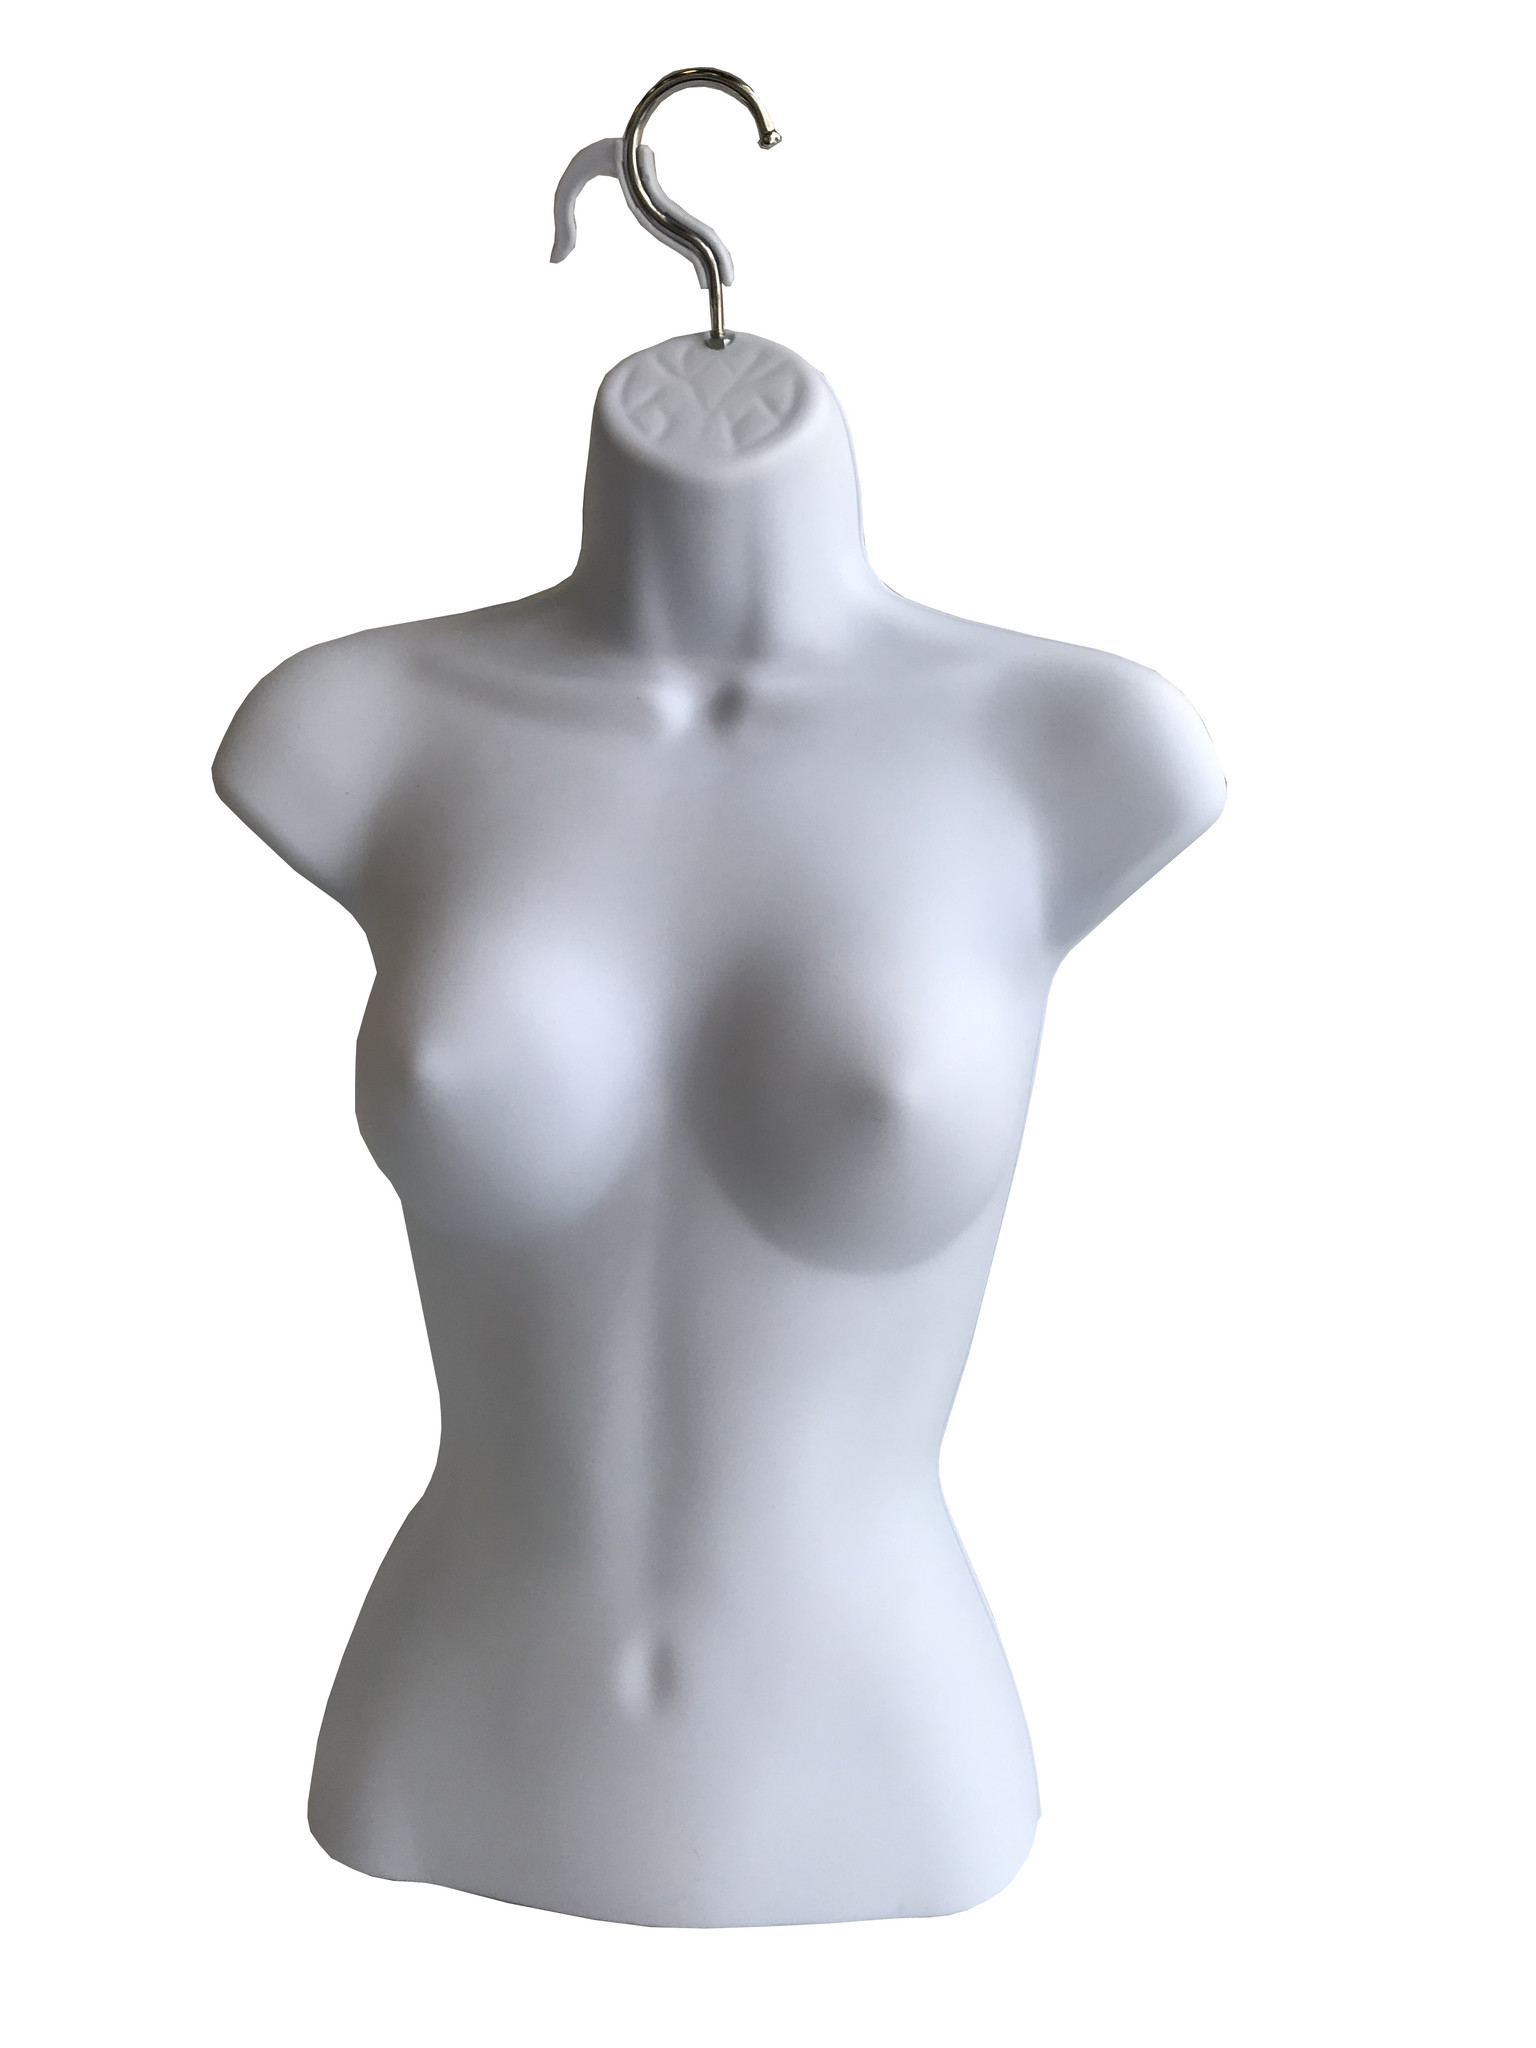 Female body bust form 3209 - Mobico - Mobico inc.